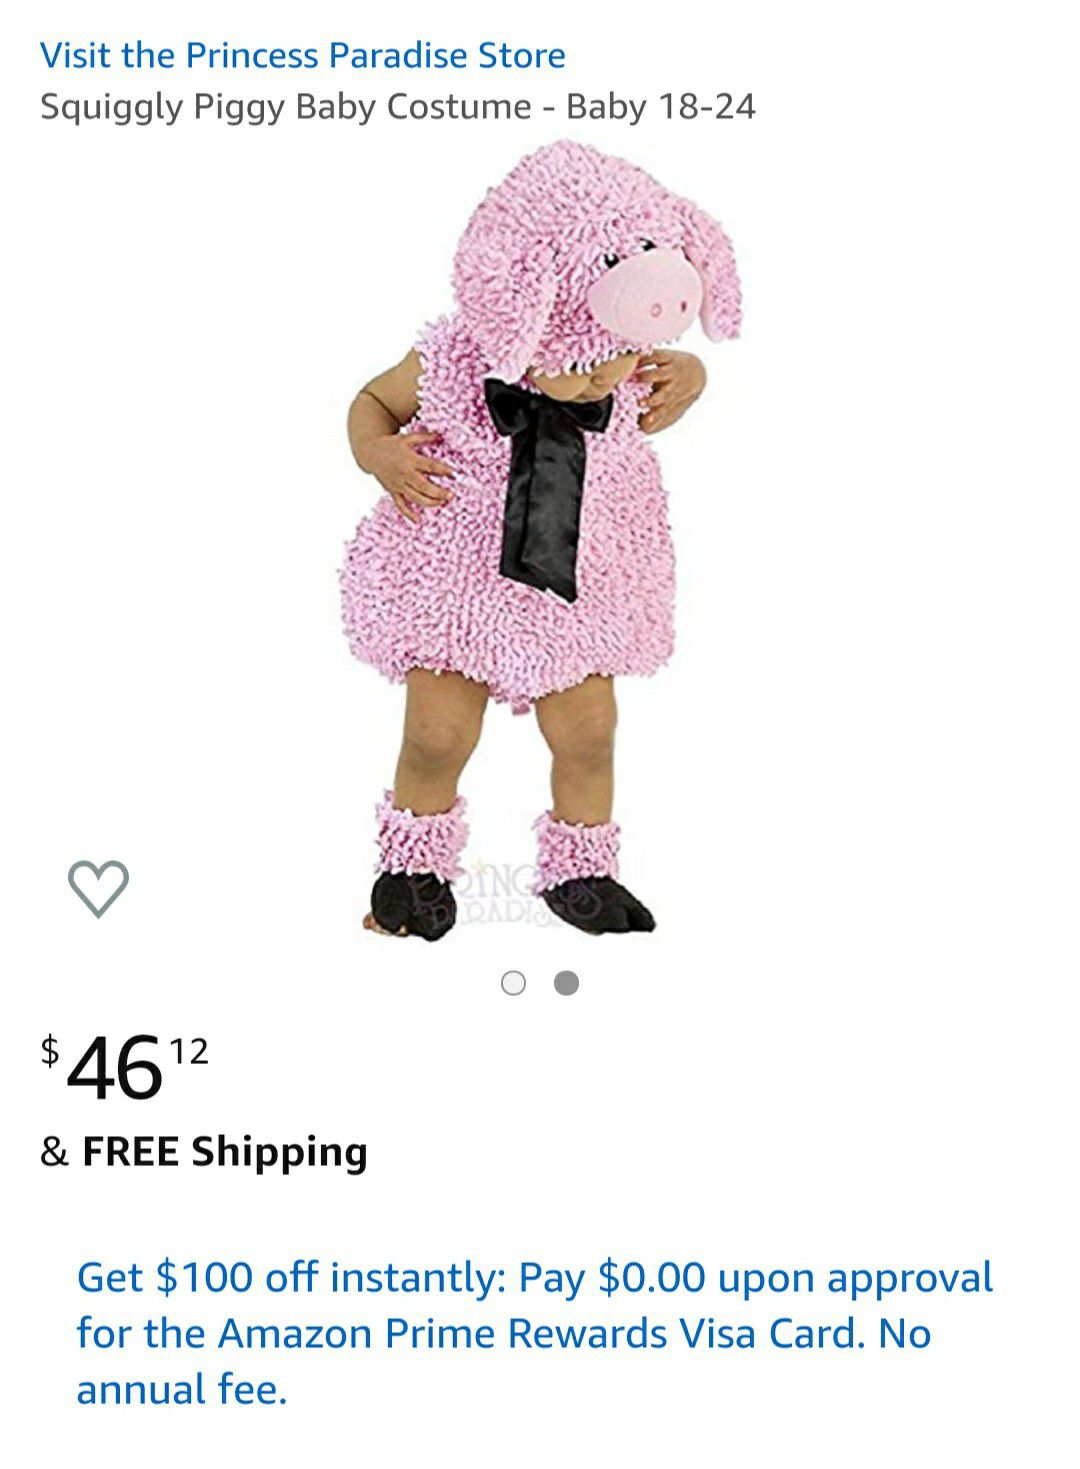 Little Piggy Costume